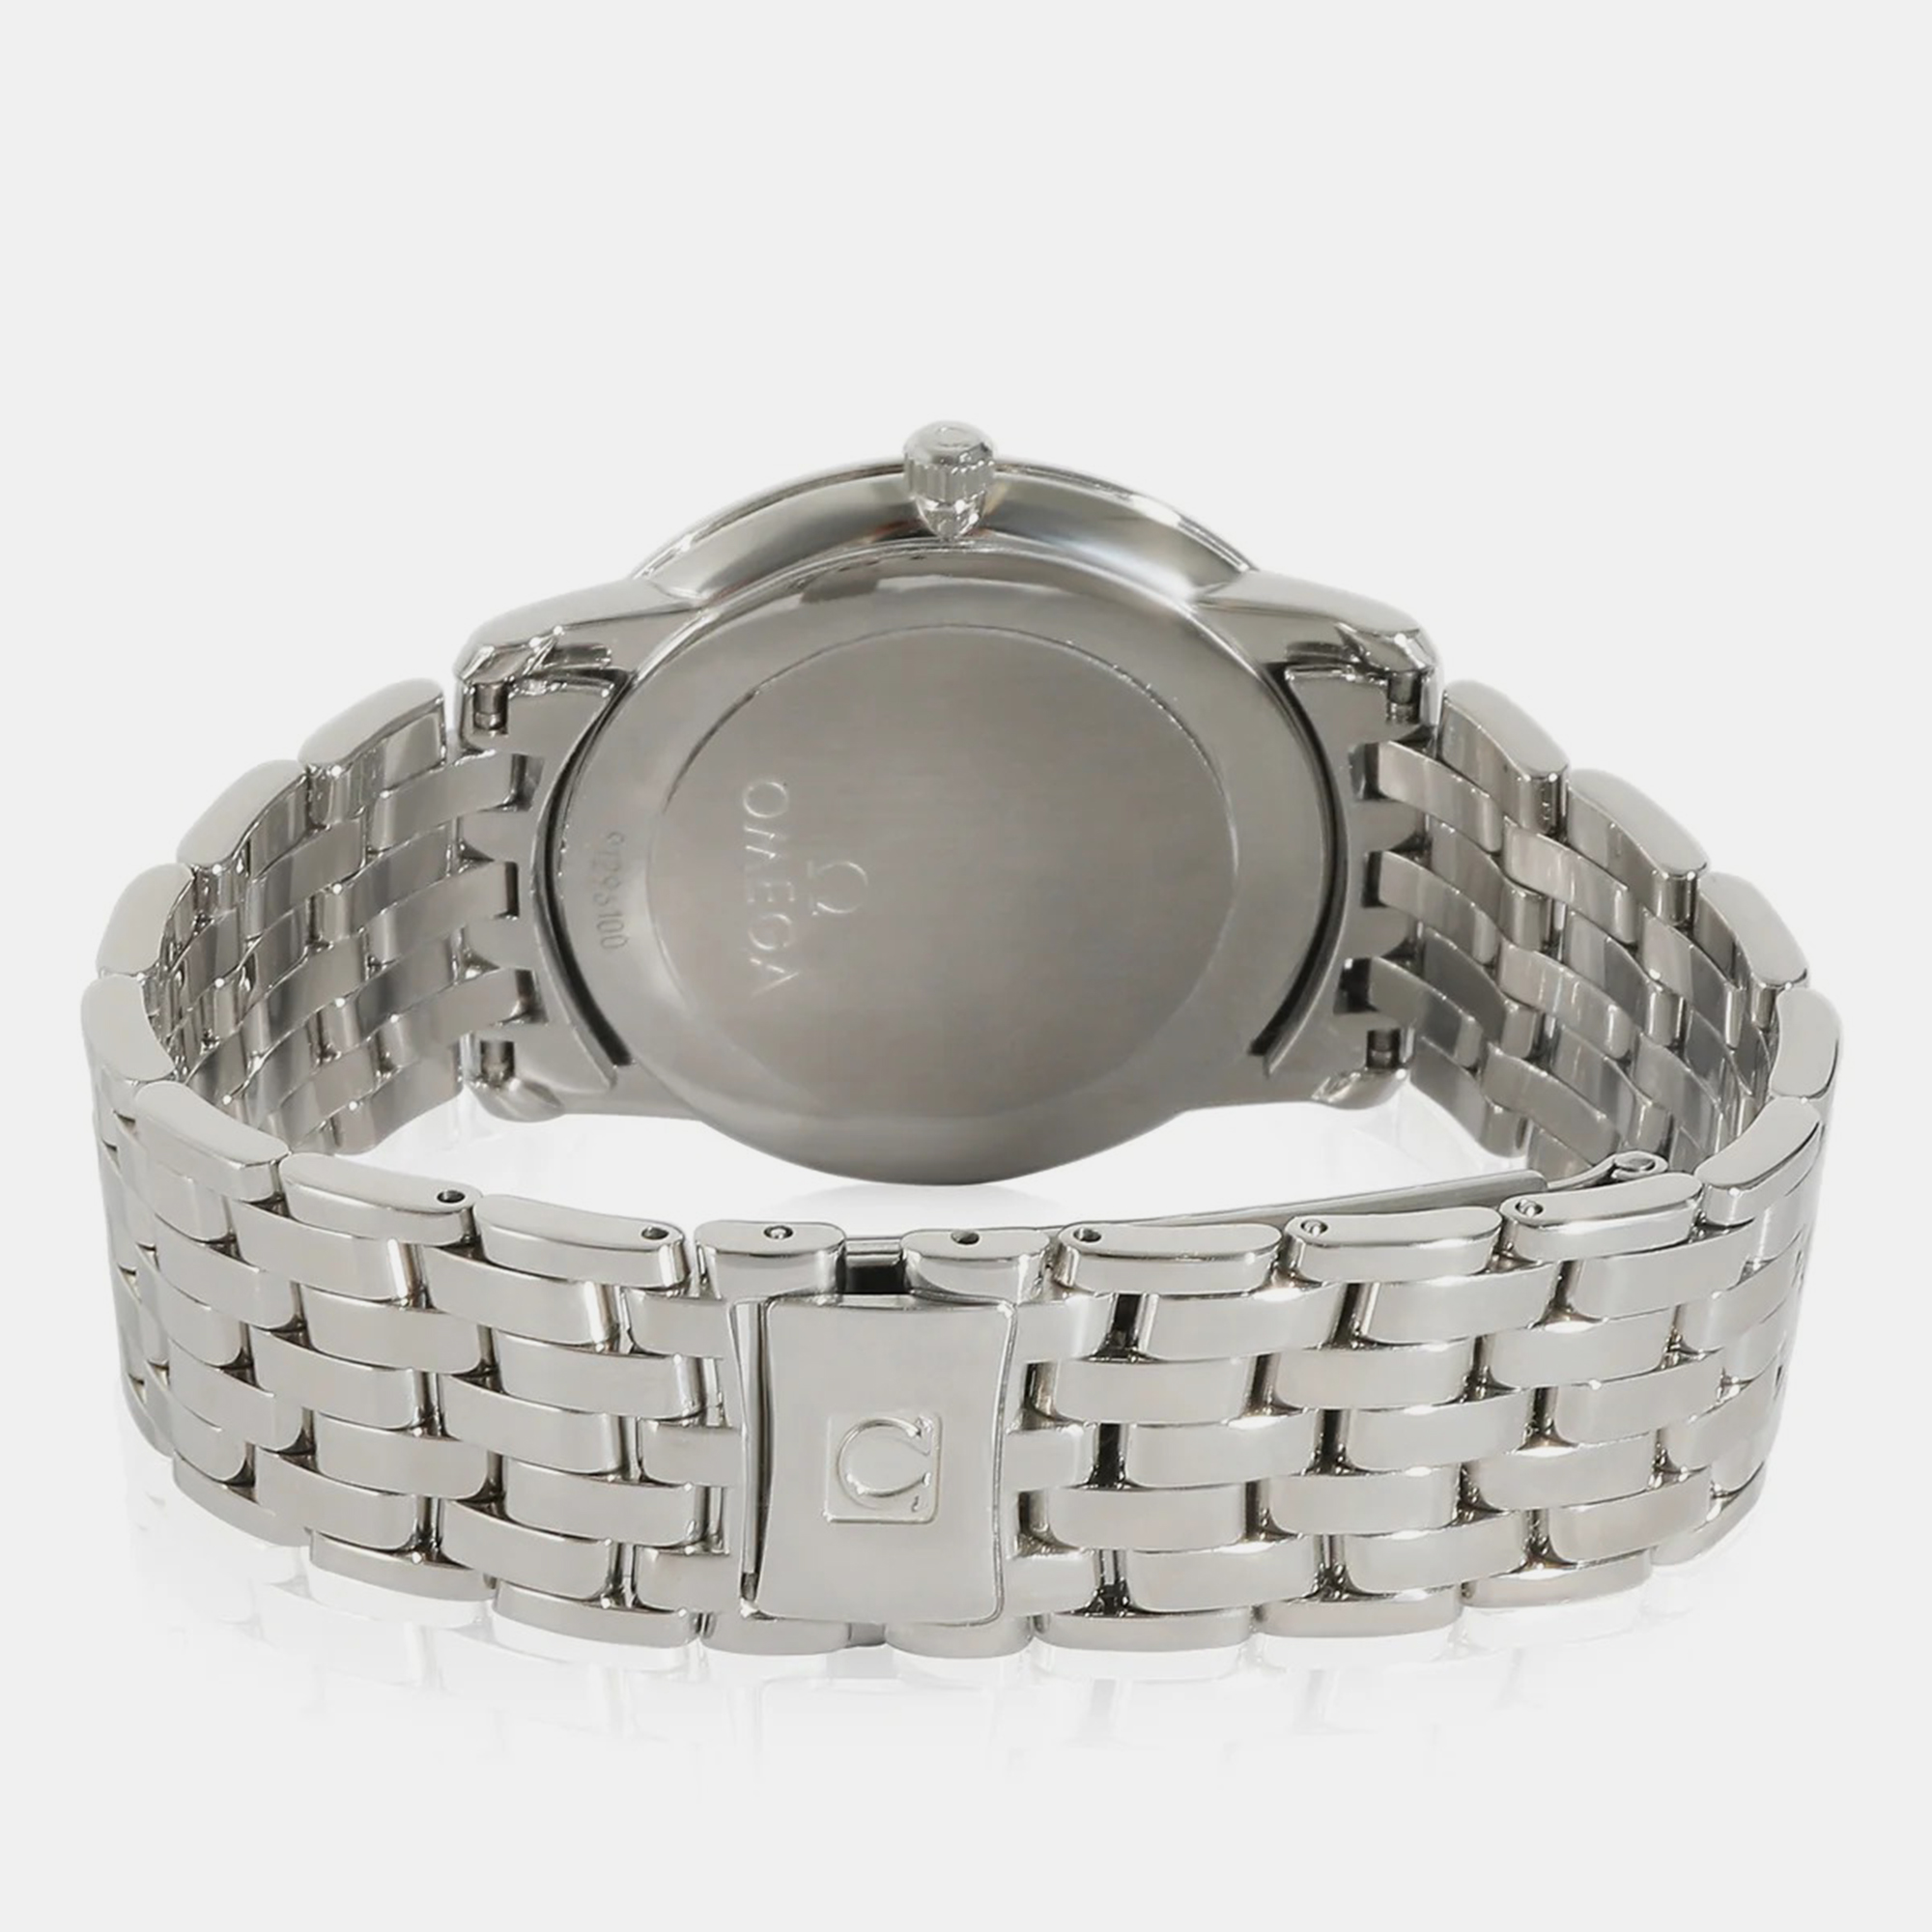 Omega Silver Stainless Steel De Ville 4510.33 Quartz Women's Wristwatch 34 Mm